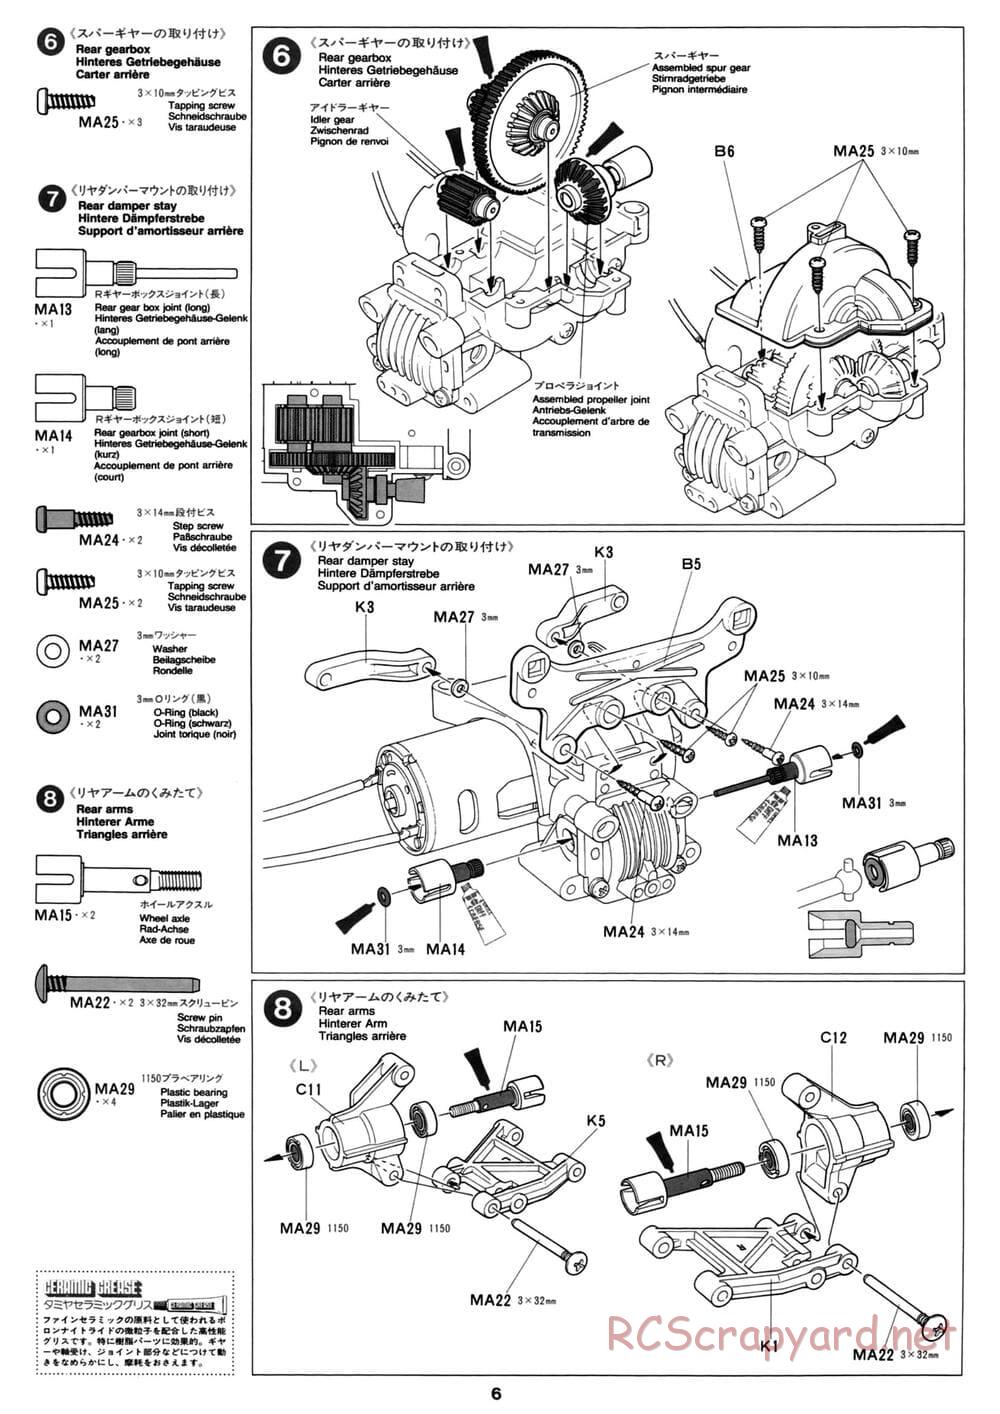 Tamiya - Repsol Ford Escort RS Cosworth - TA-02 Chassis - Manual - Page 6